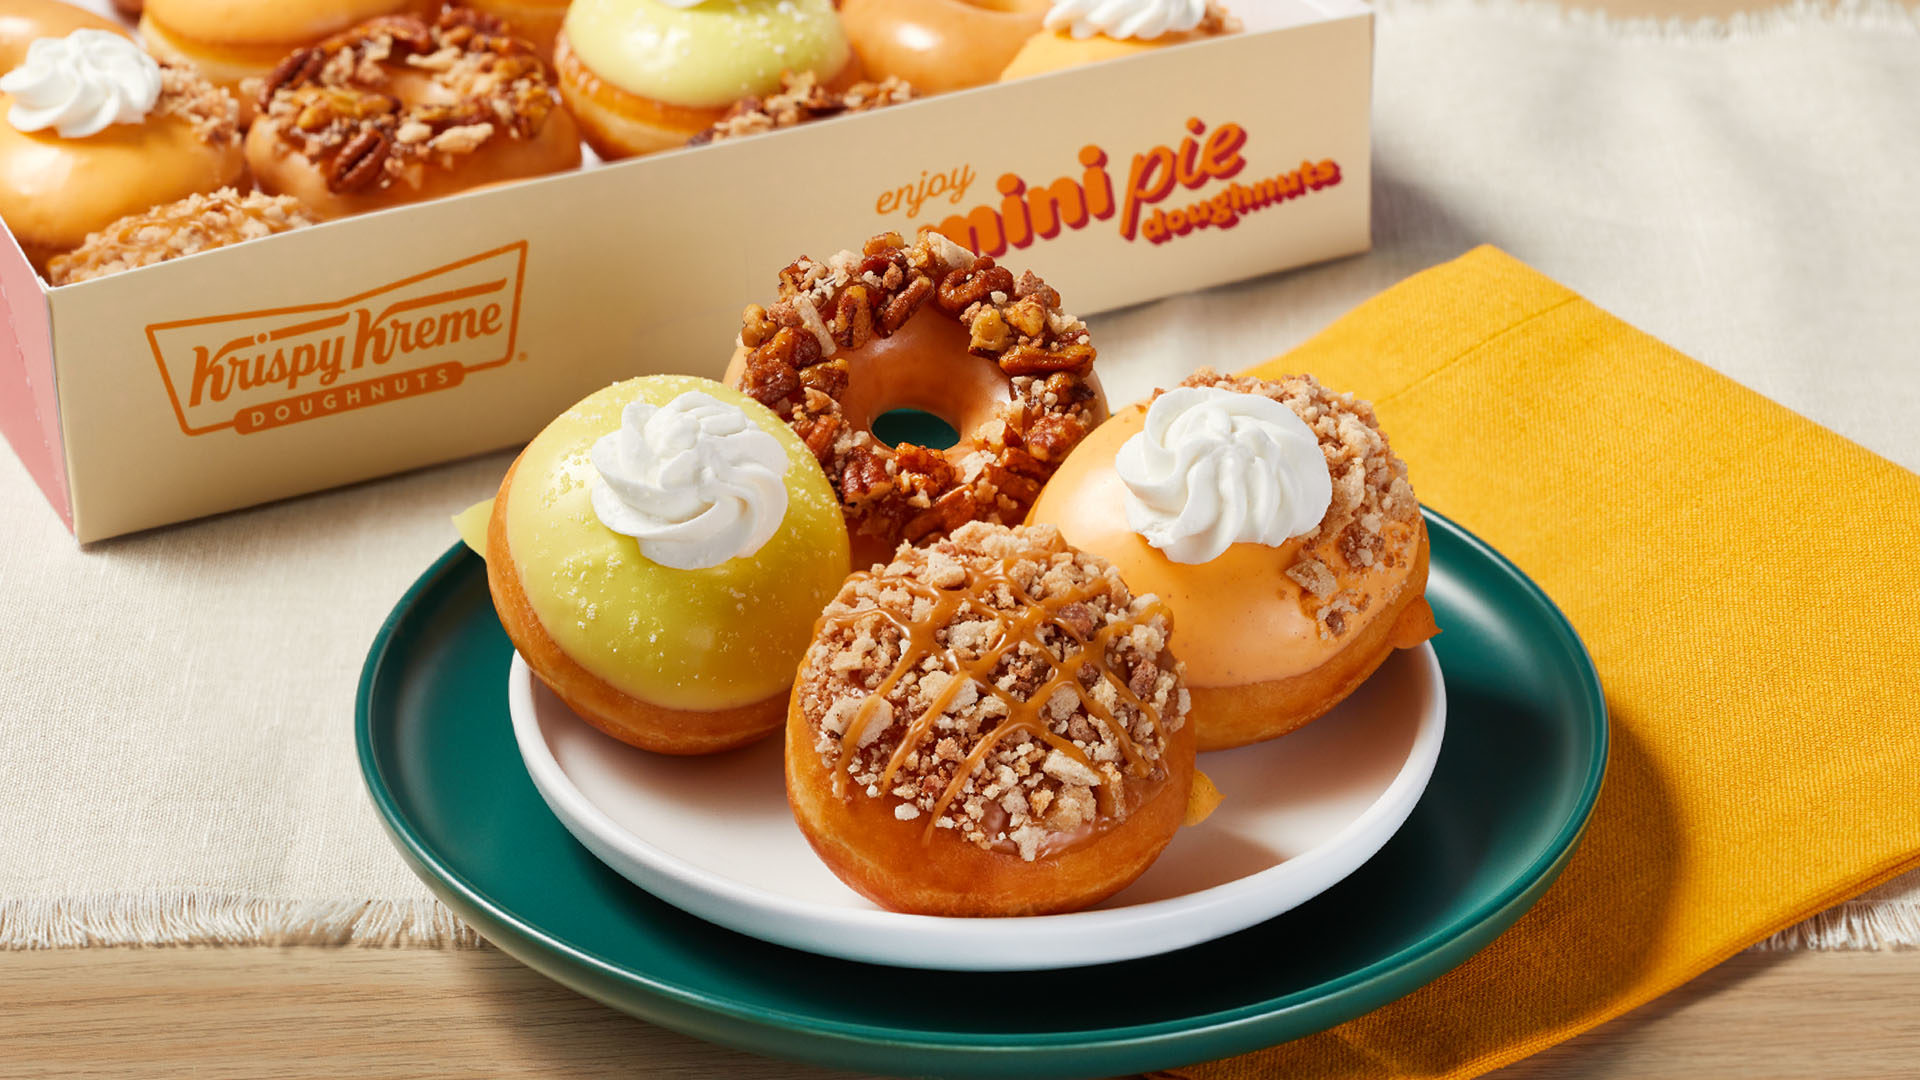 Krispy Kreme's Thanksgiving mini pie donuts